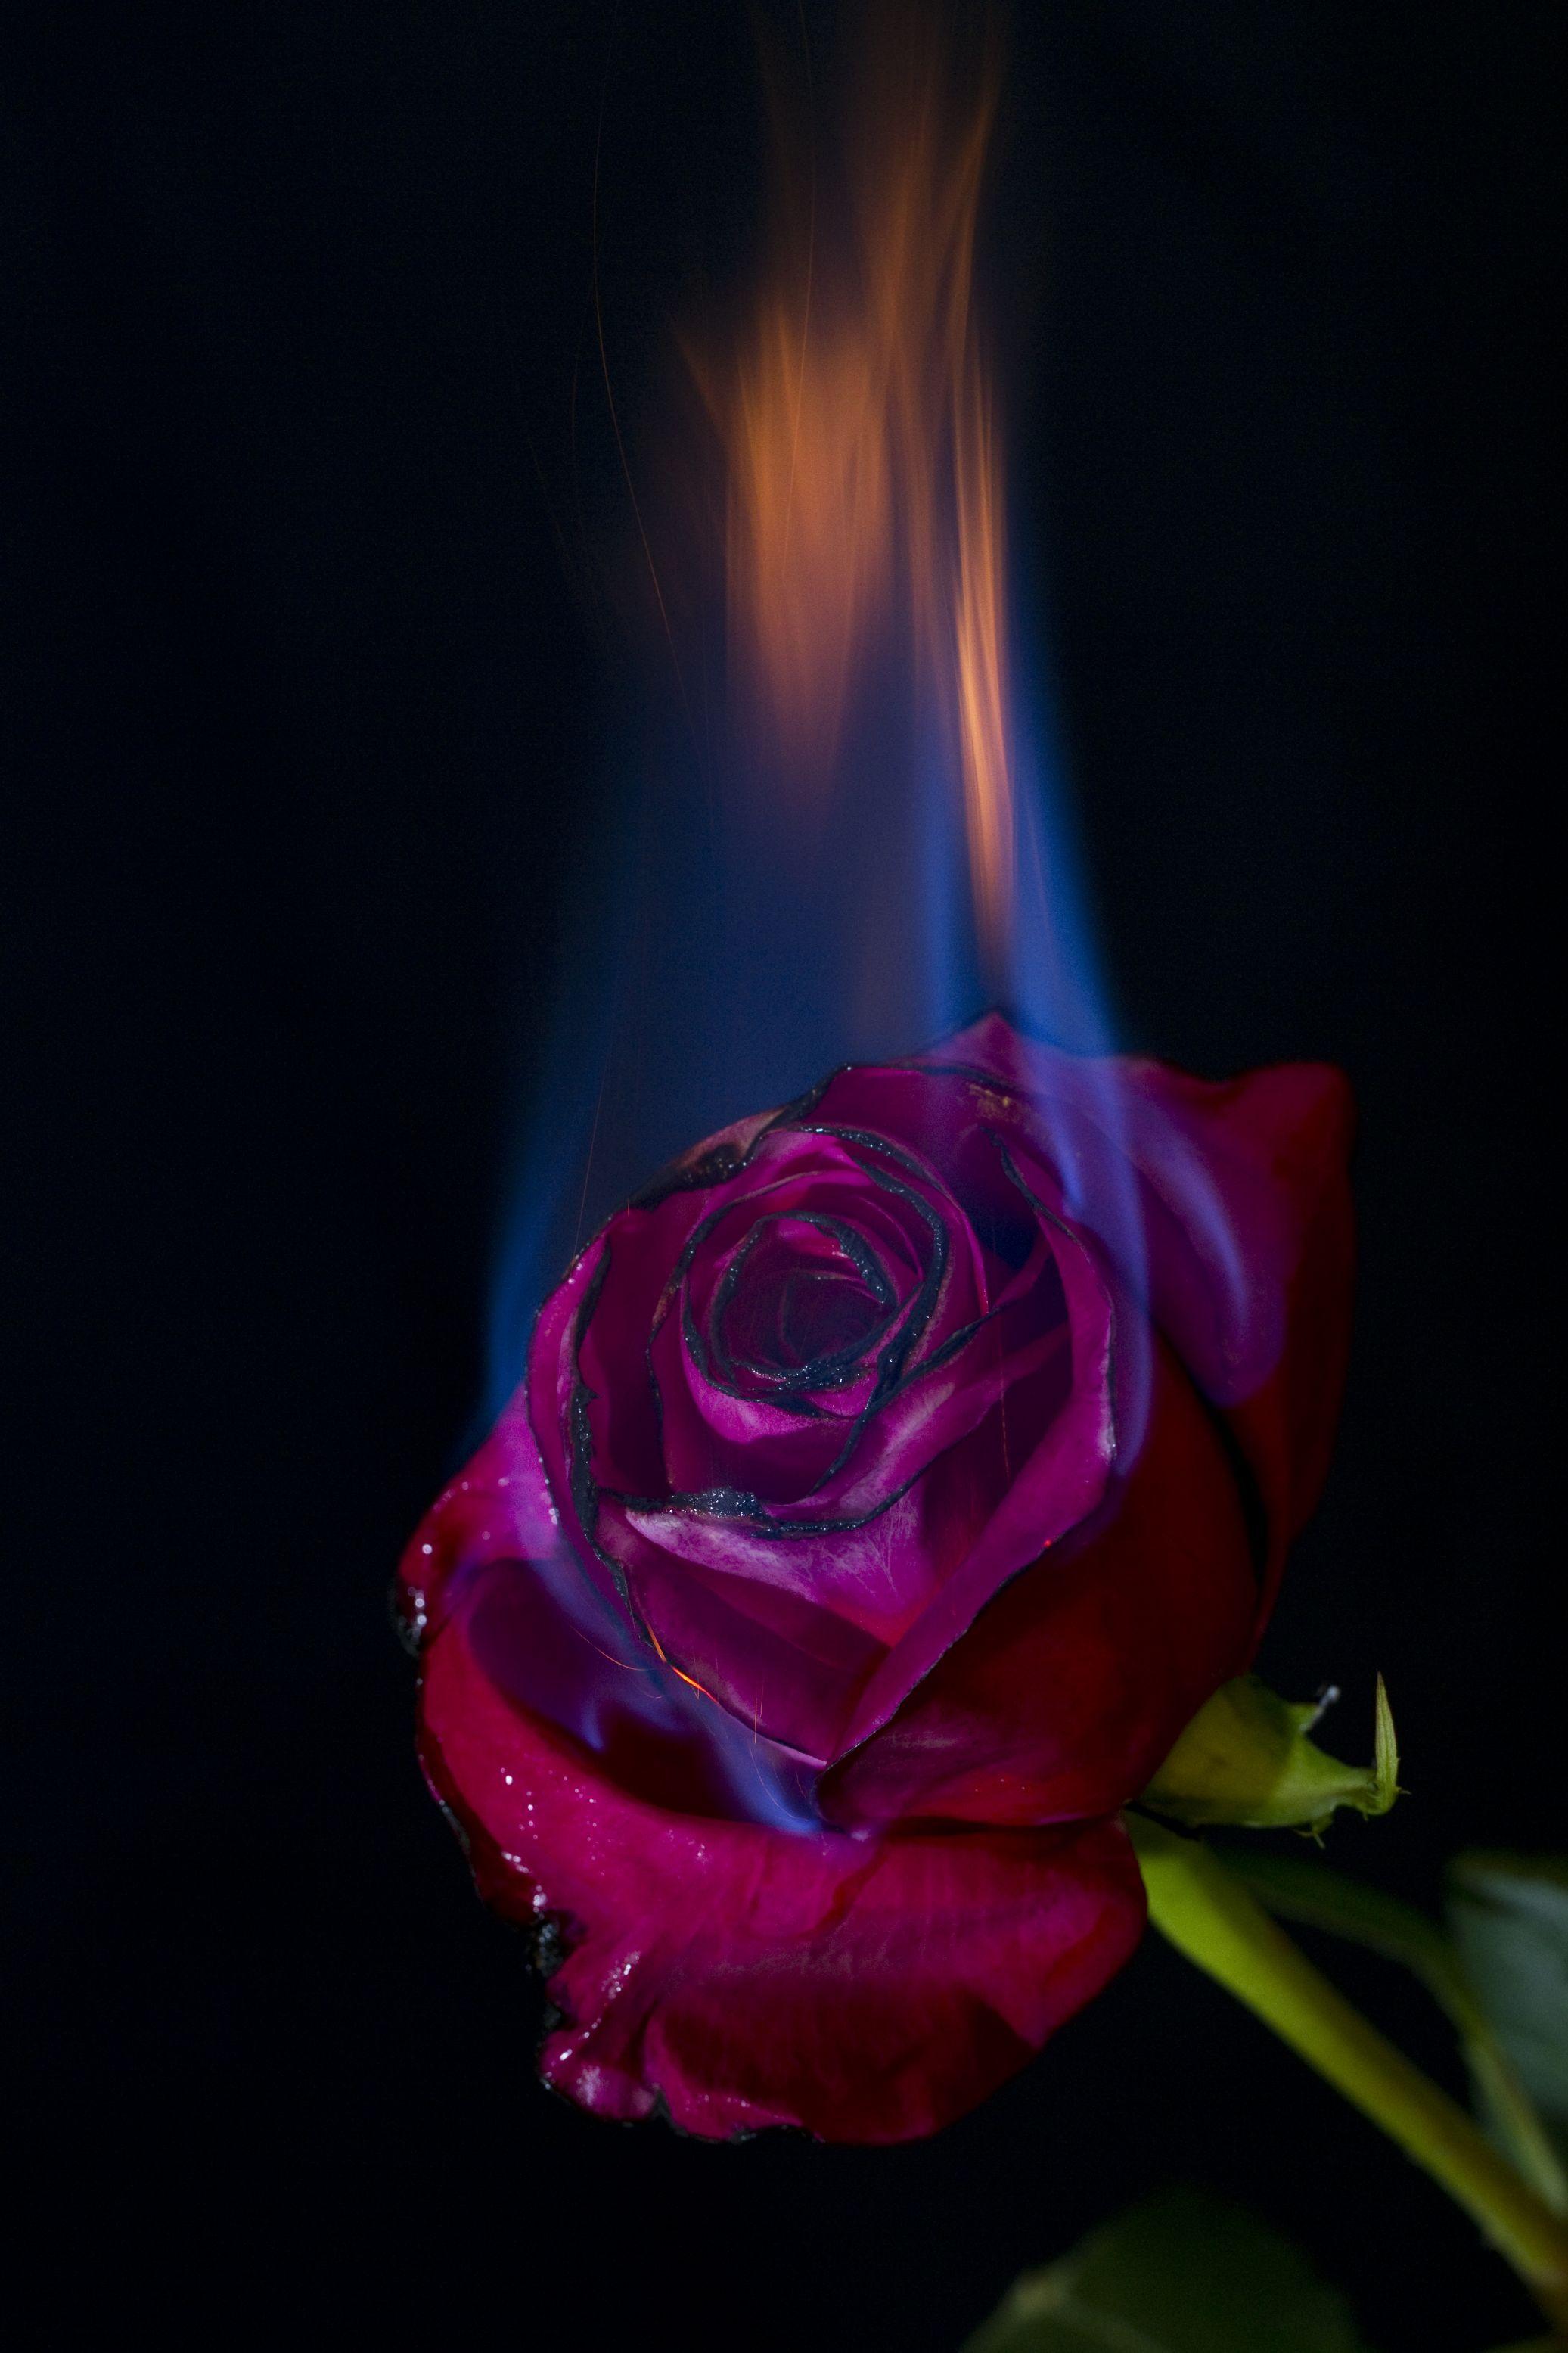 A little project I shot today. Burning rose, Rose wallpaper